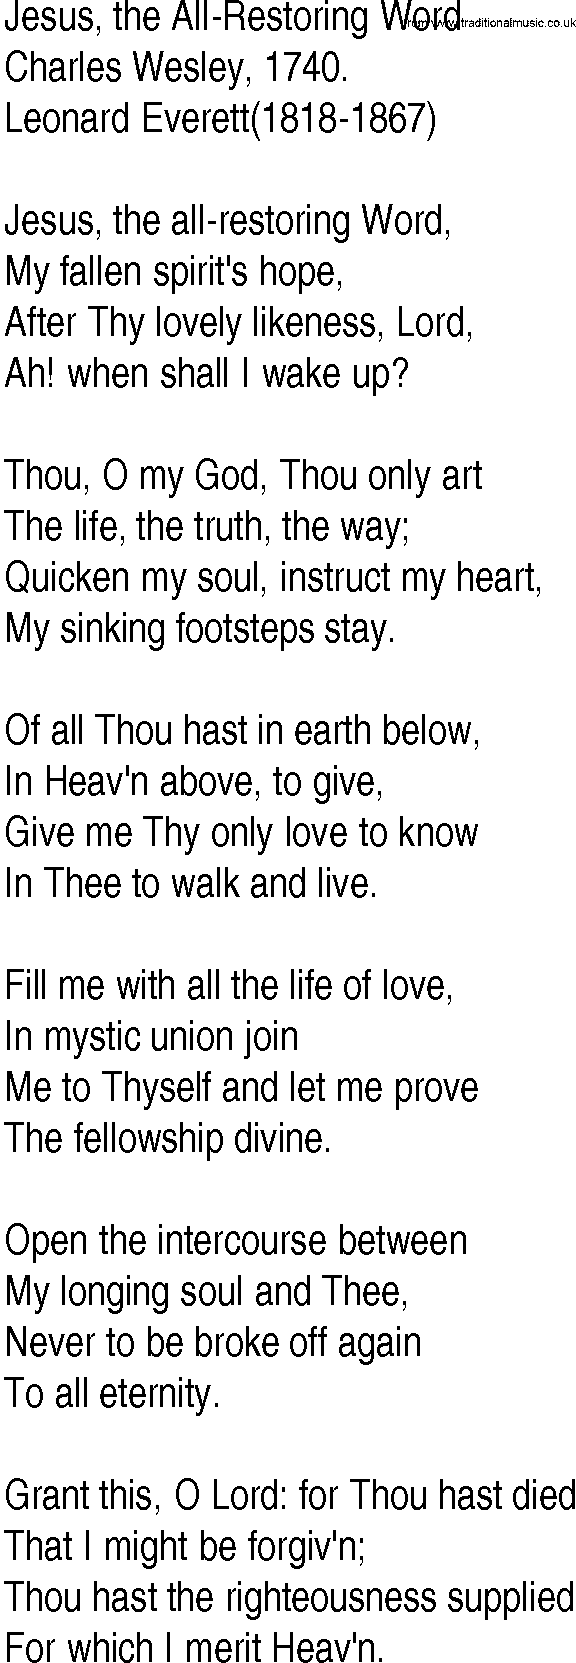 Hymn and Gospel Song: Jesus, the All-Restoring Word by Charles Wesley lyrics